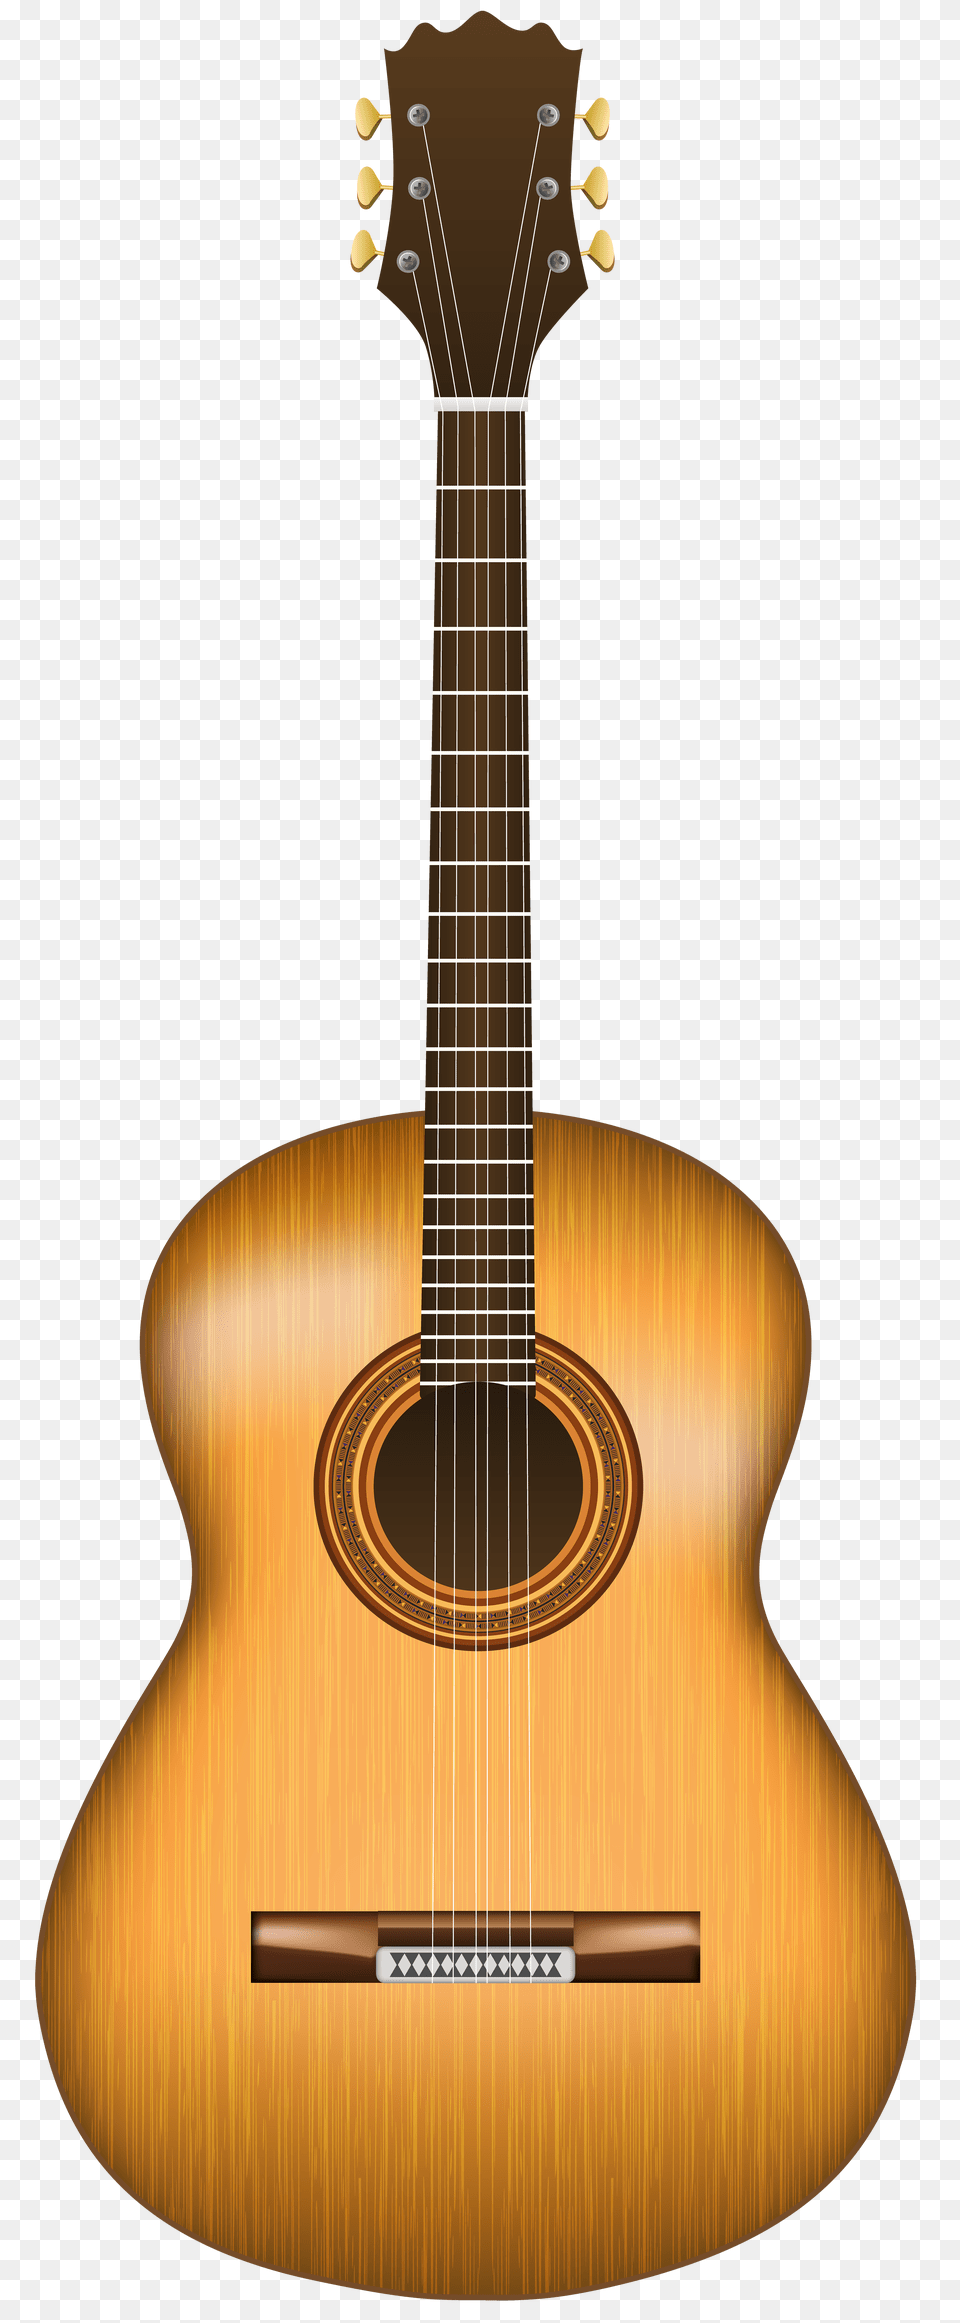 Guitar Clipart Clip Art Images, Musical Instrument Png Image